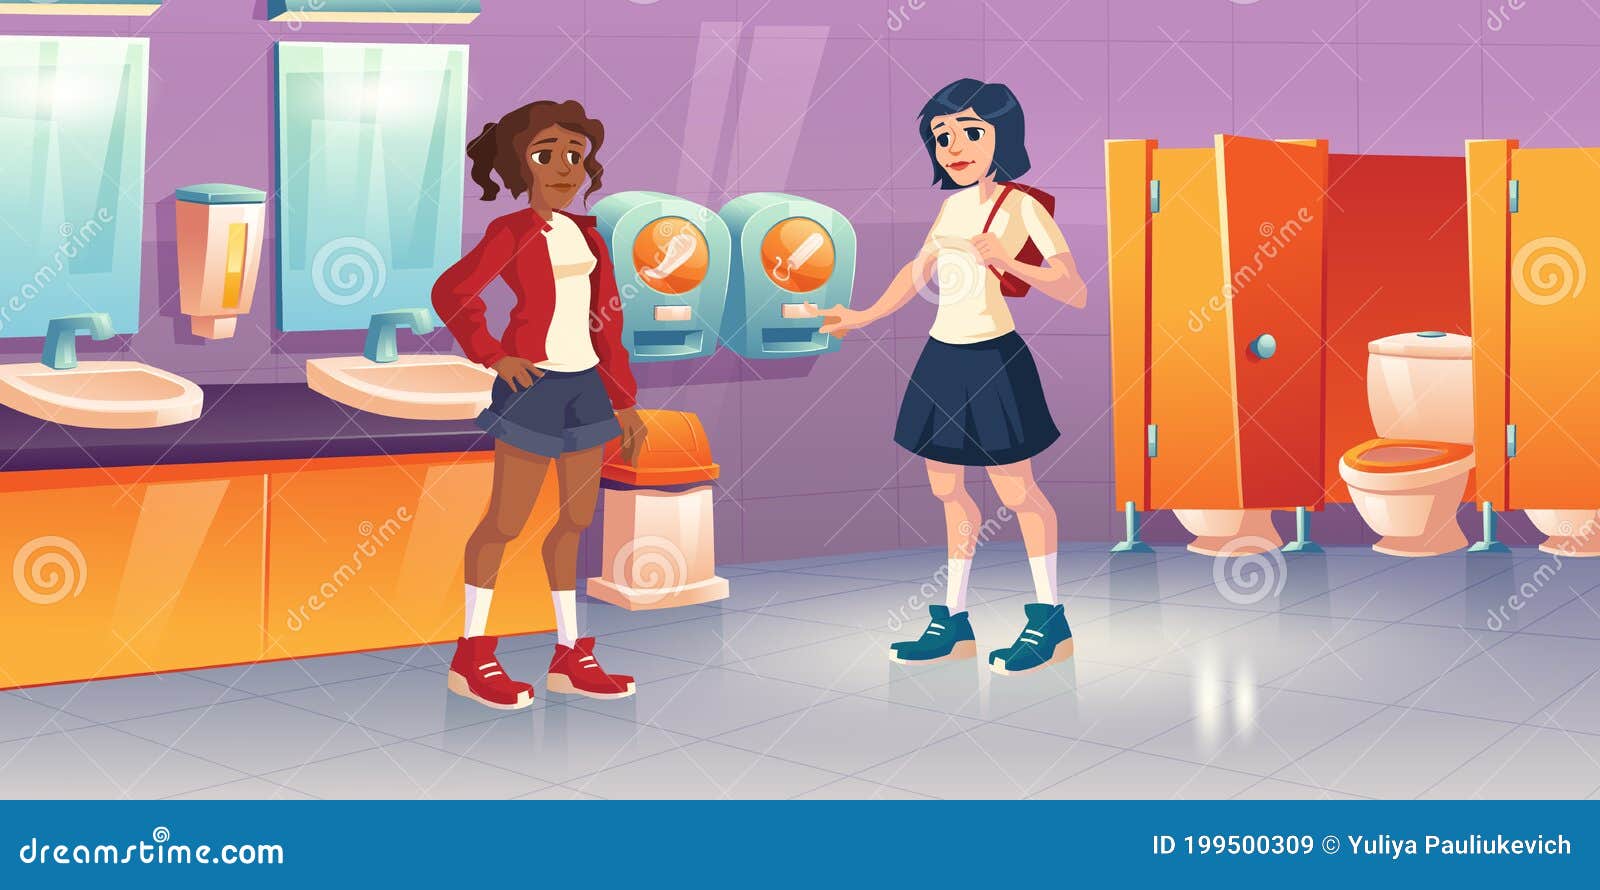 Girls In Public Toilet With Tampon Vending Machine Cartoon Vector